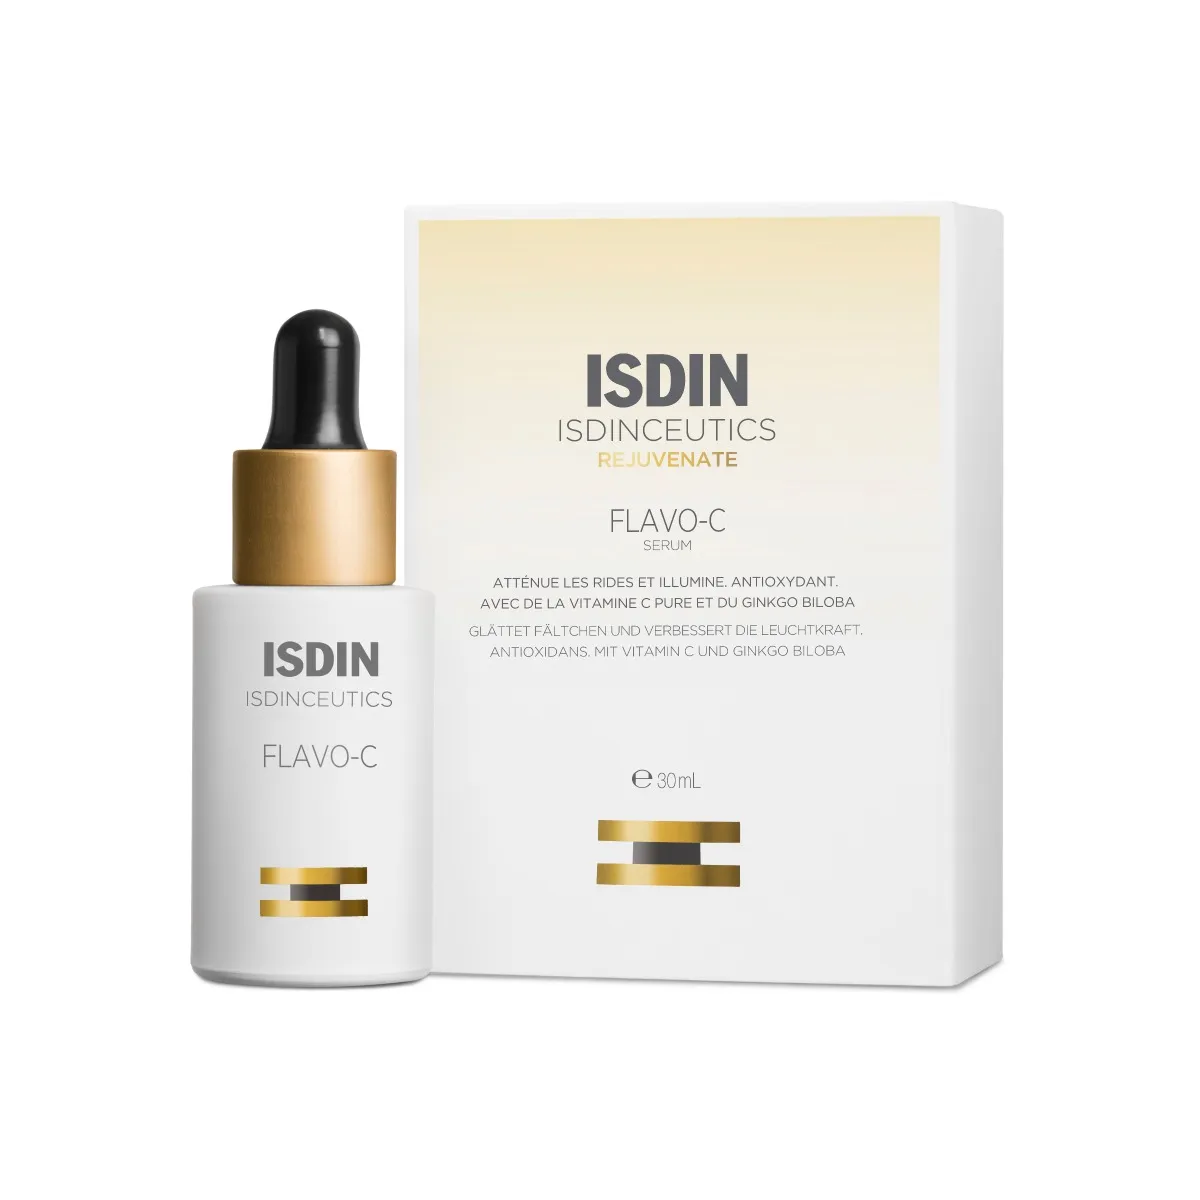 isdin-isdinceutics flavo-c serum 30ml 8429420156616